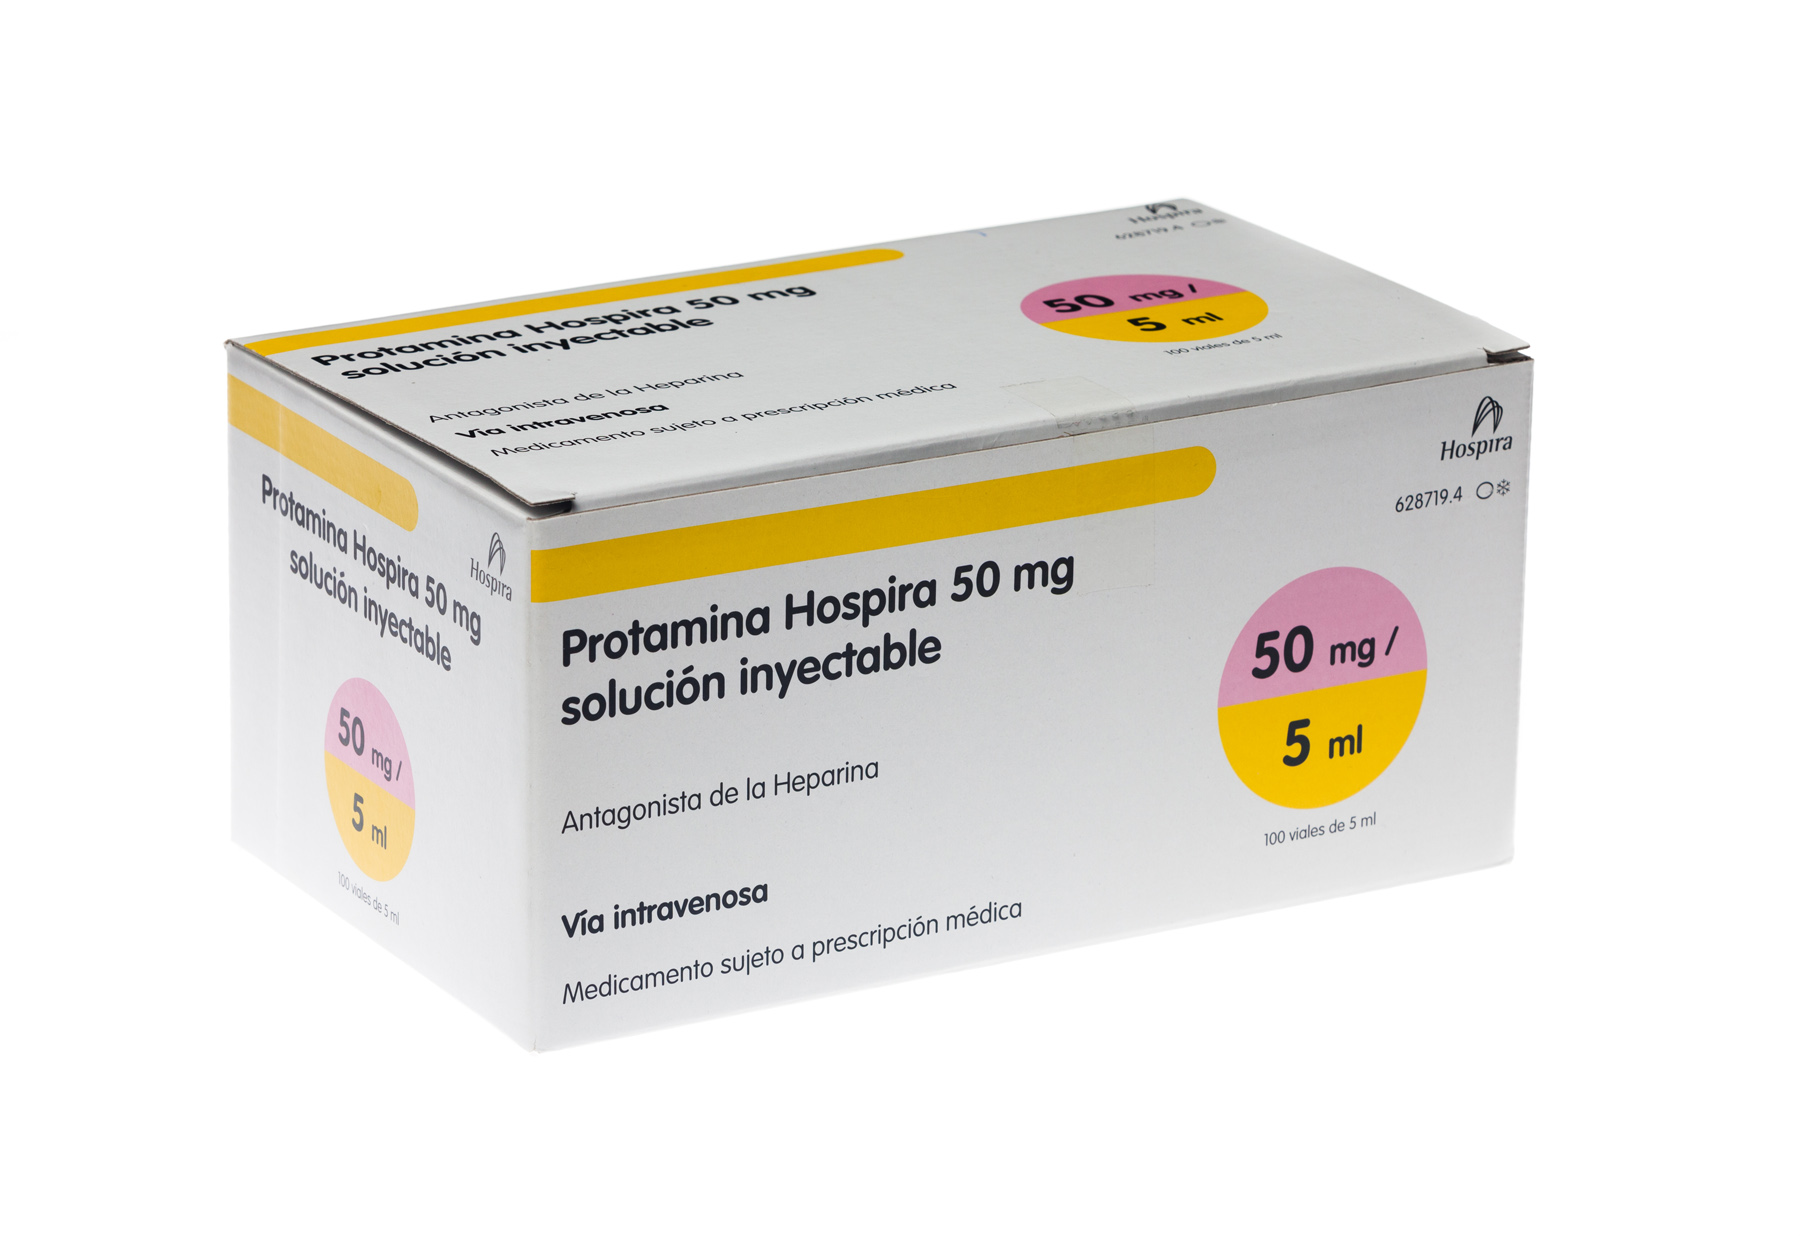 PROTAMINA HOSPIRA 10 mg/ml 100 VIALES SOLUCION INYECTABLE 5 ml